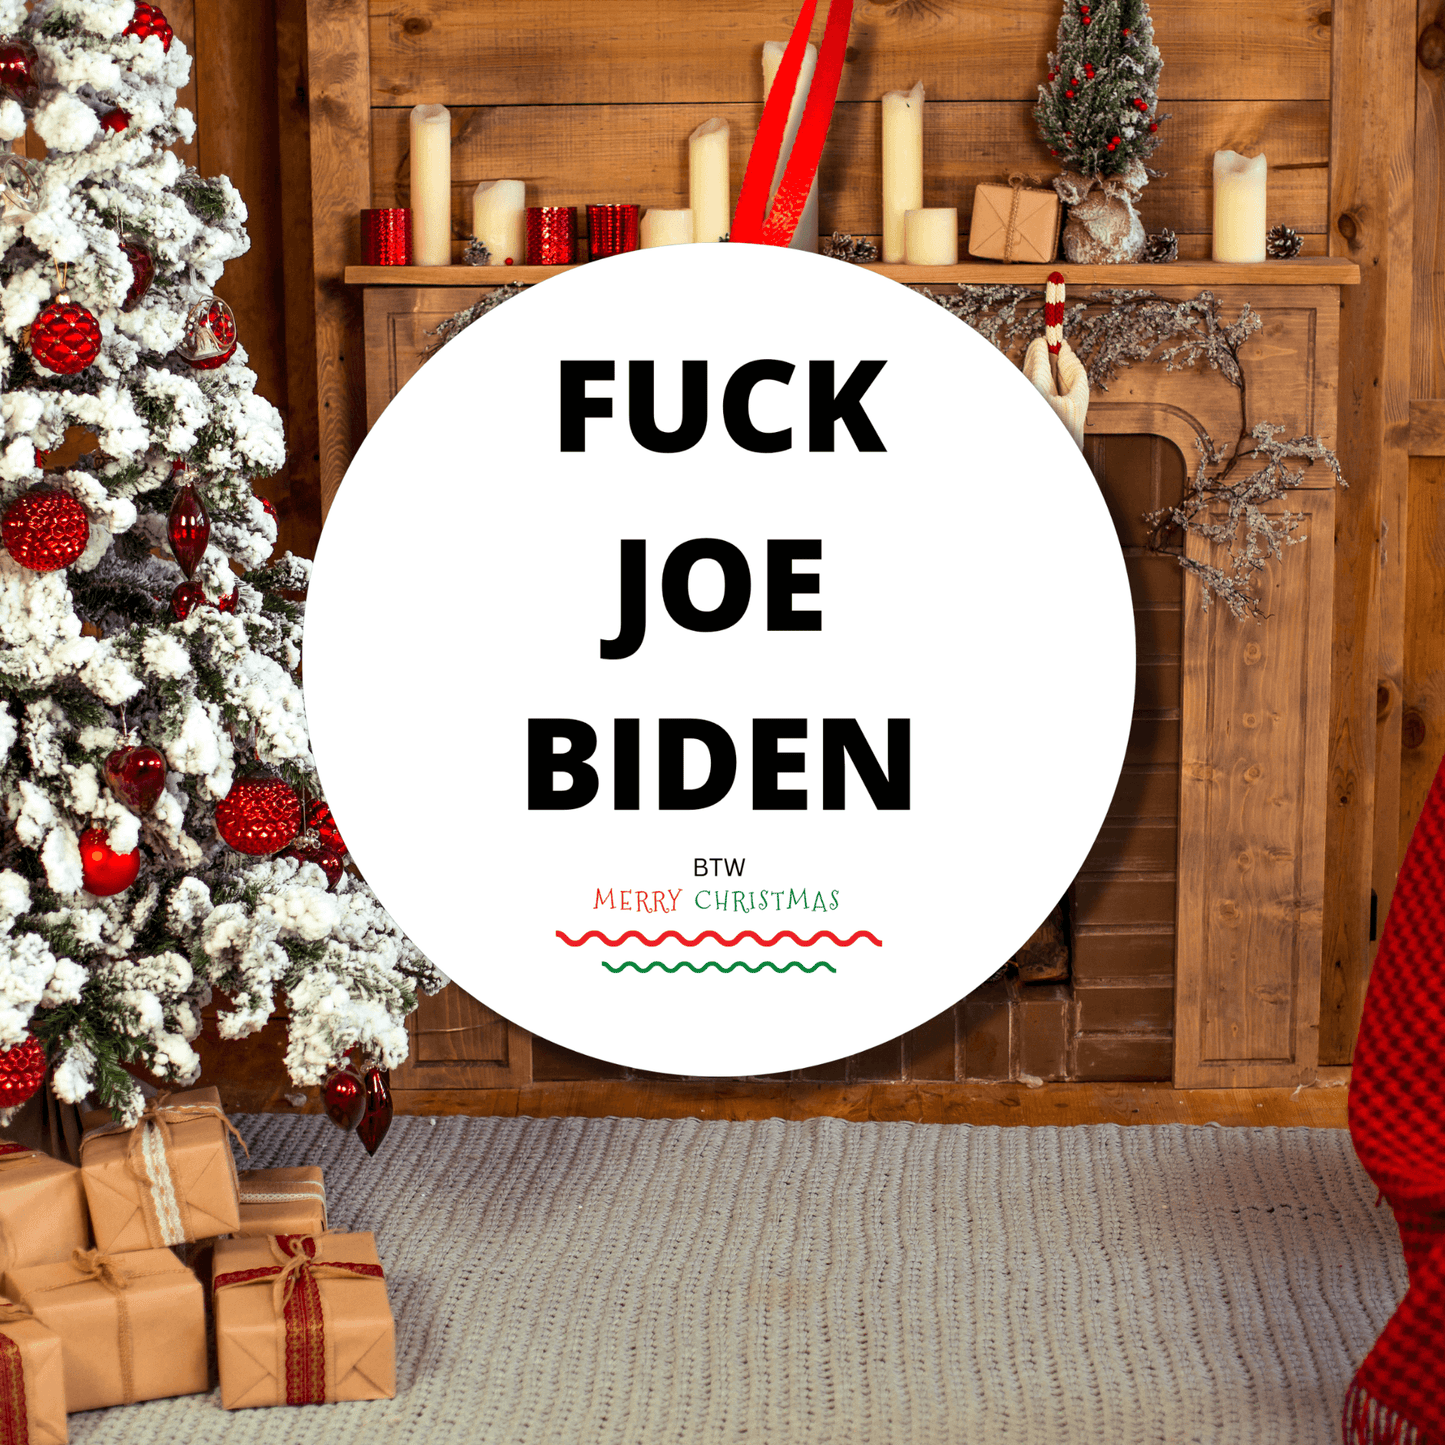 Fuck Joe Biden Christmas Ornament FJB 7